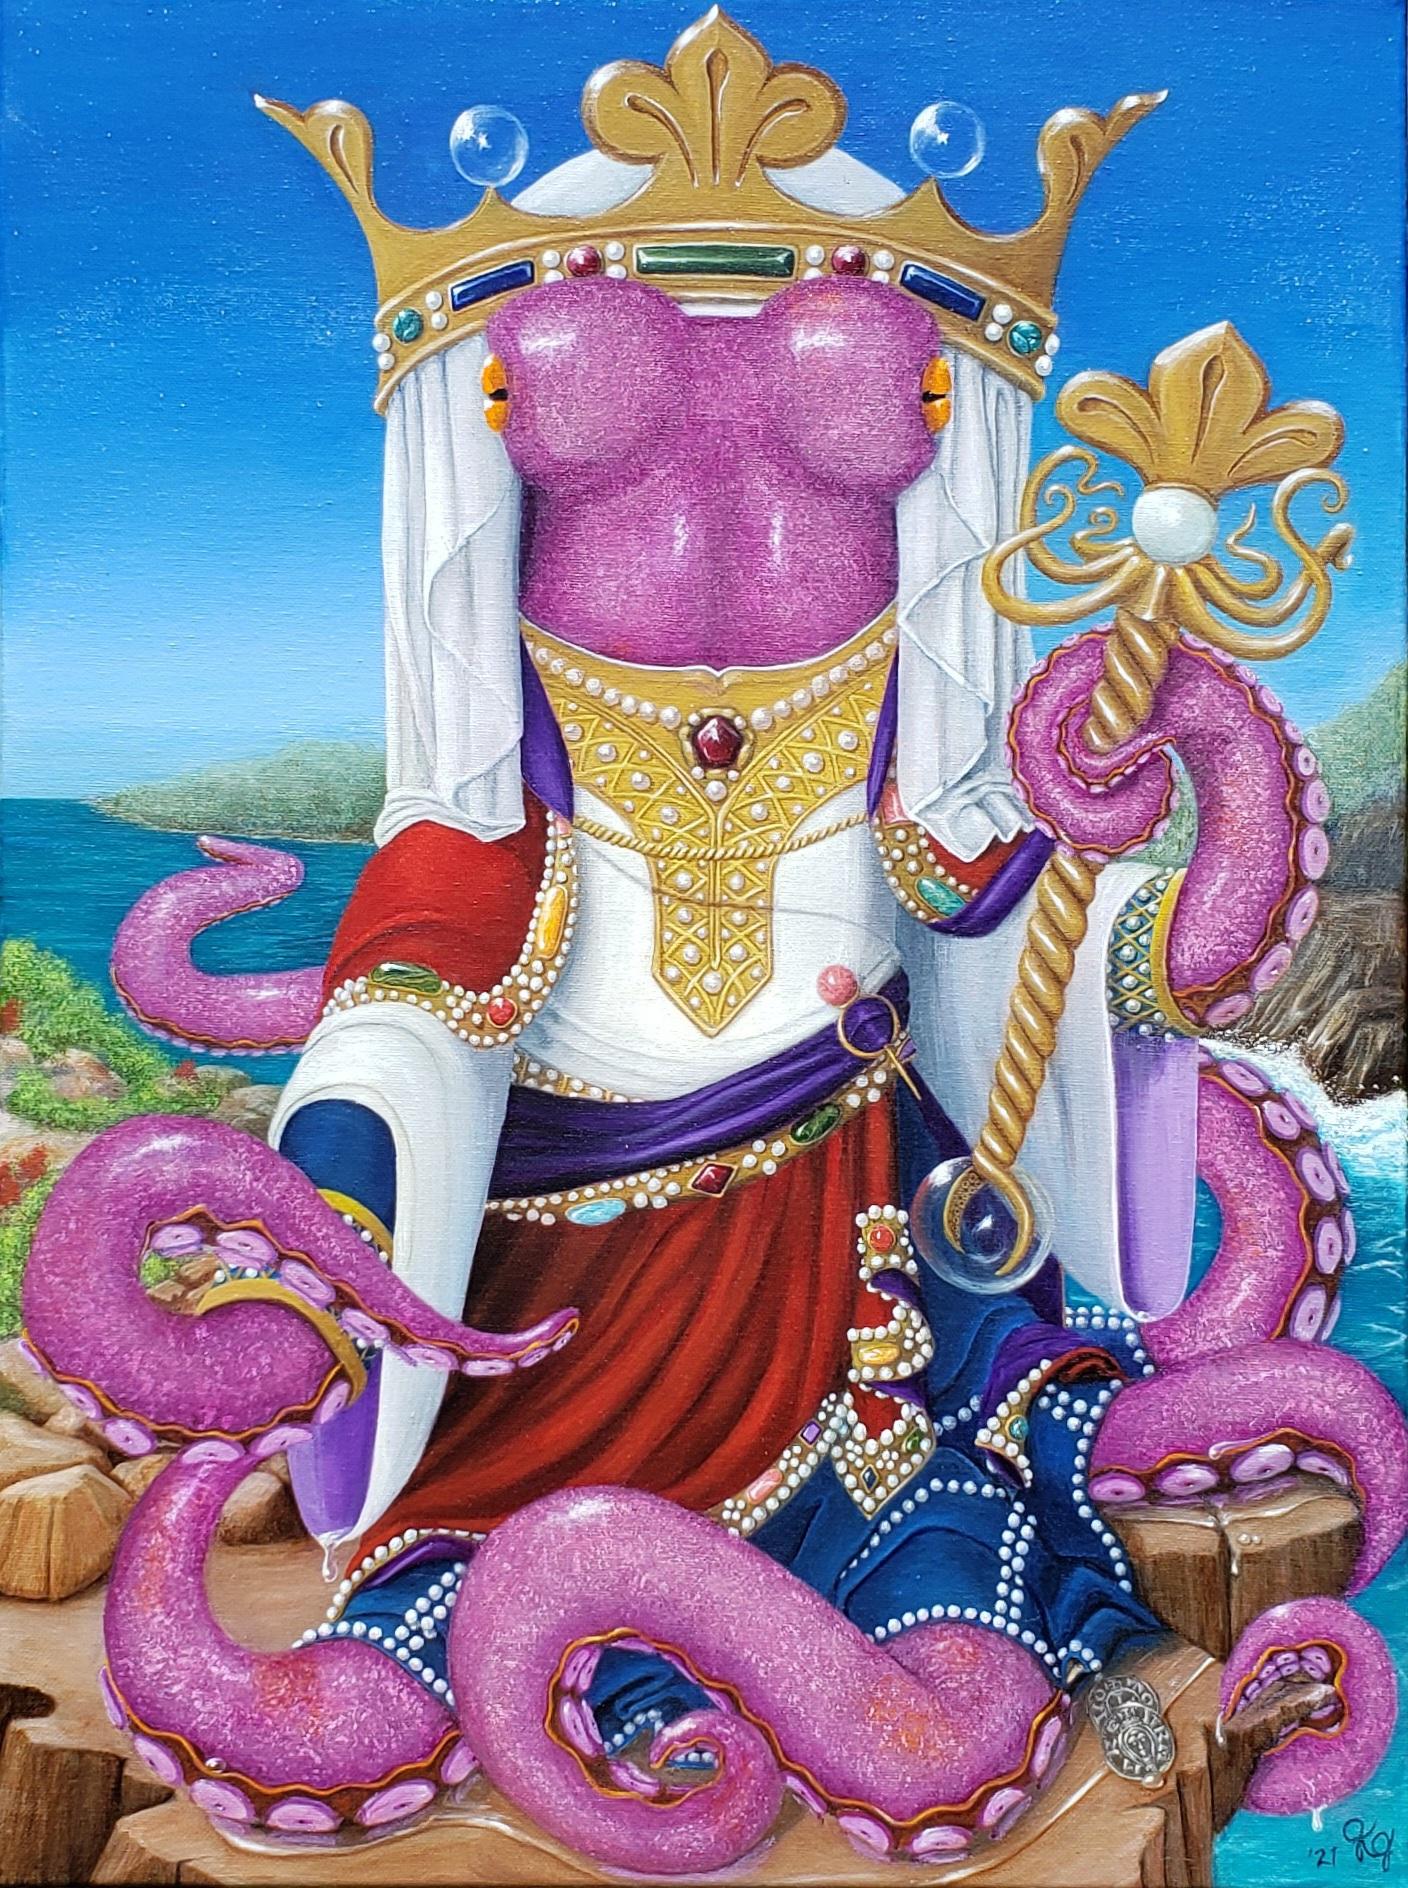 Die Herrscher des Meeres: Pulpo Reina Urraca I, Emperatriz de Toda España – Art von Georgia Griffin